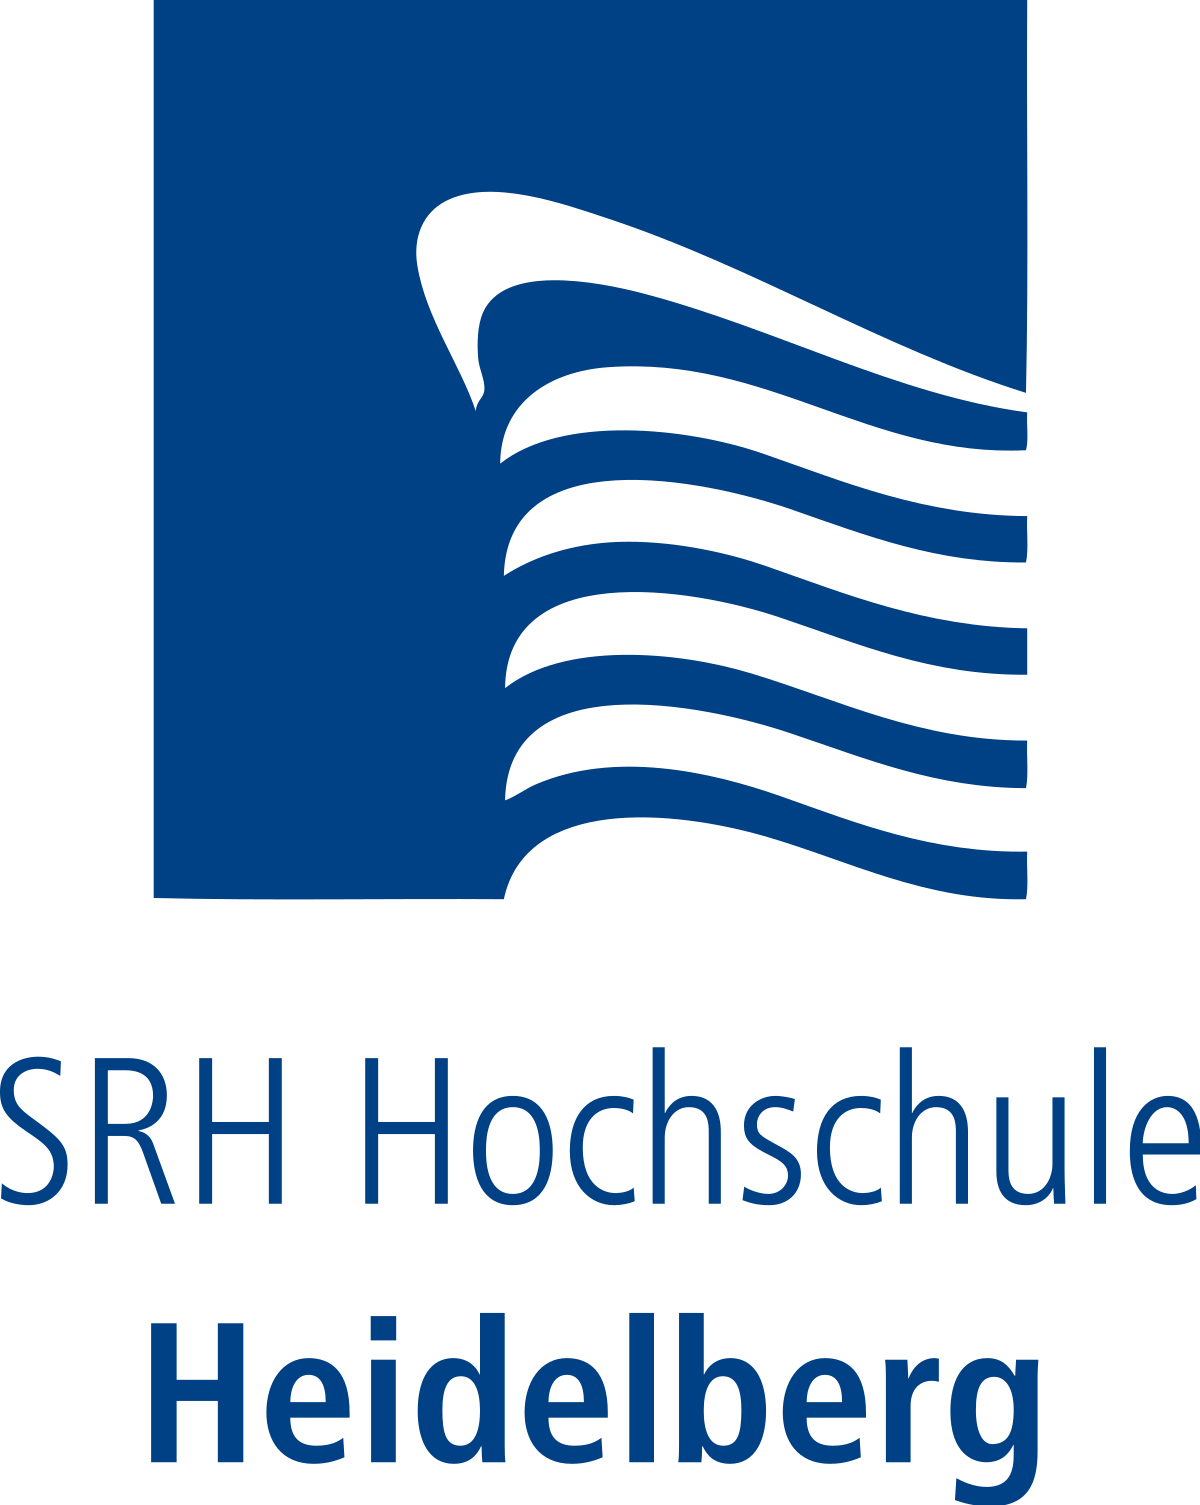 SRH Heidelberg